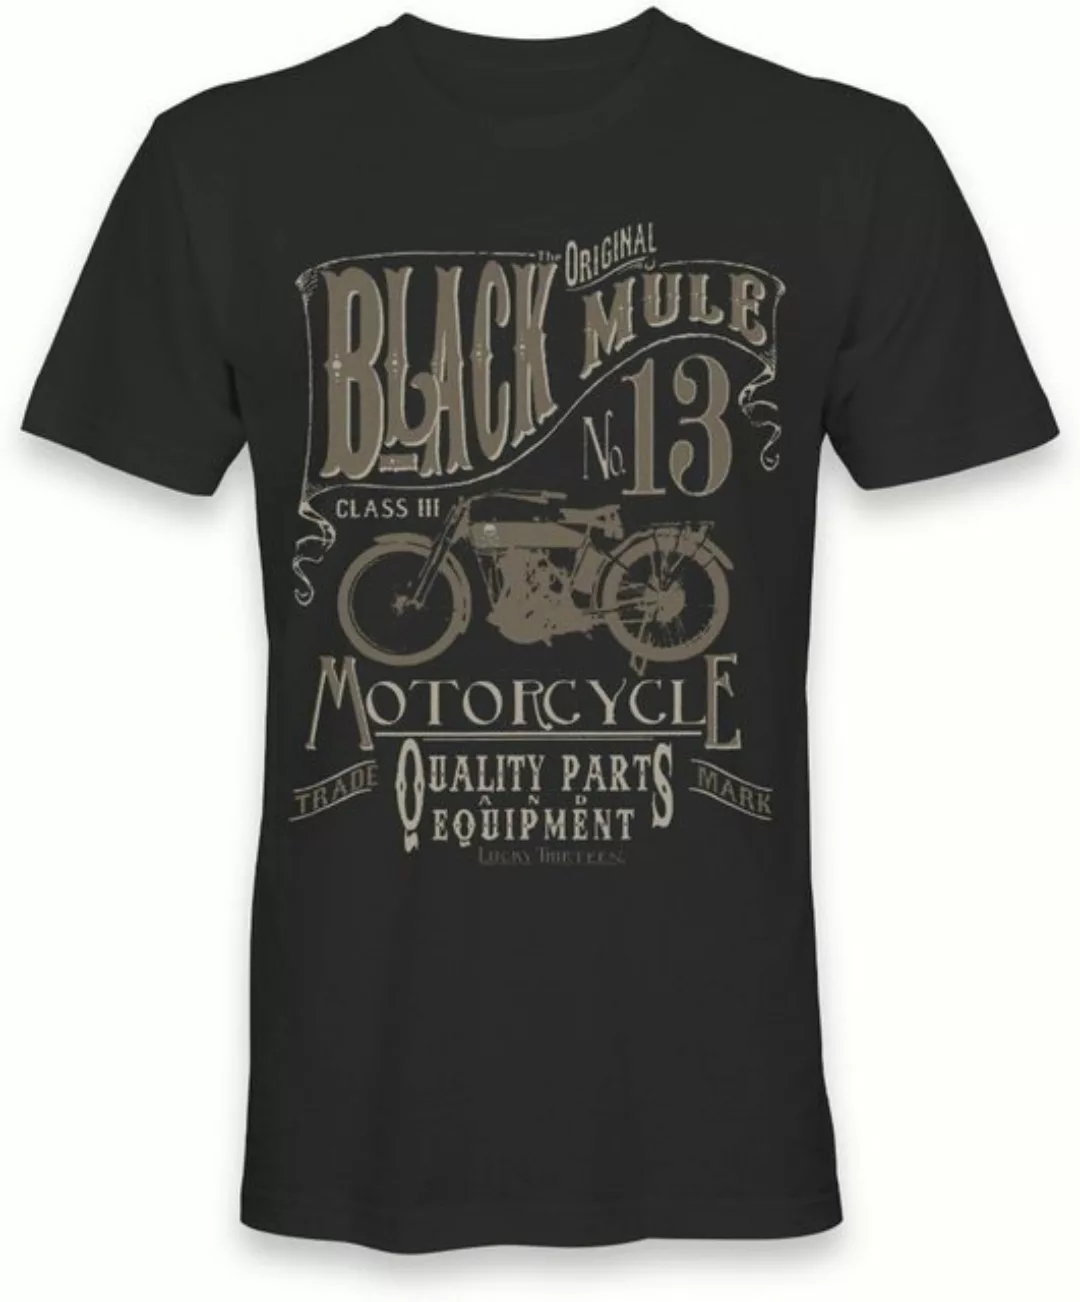 Lucky 13 T-Shirt L13 Black Mule Tee günstig online kaufen